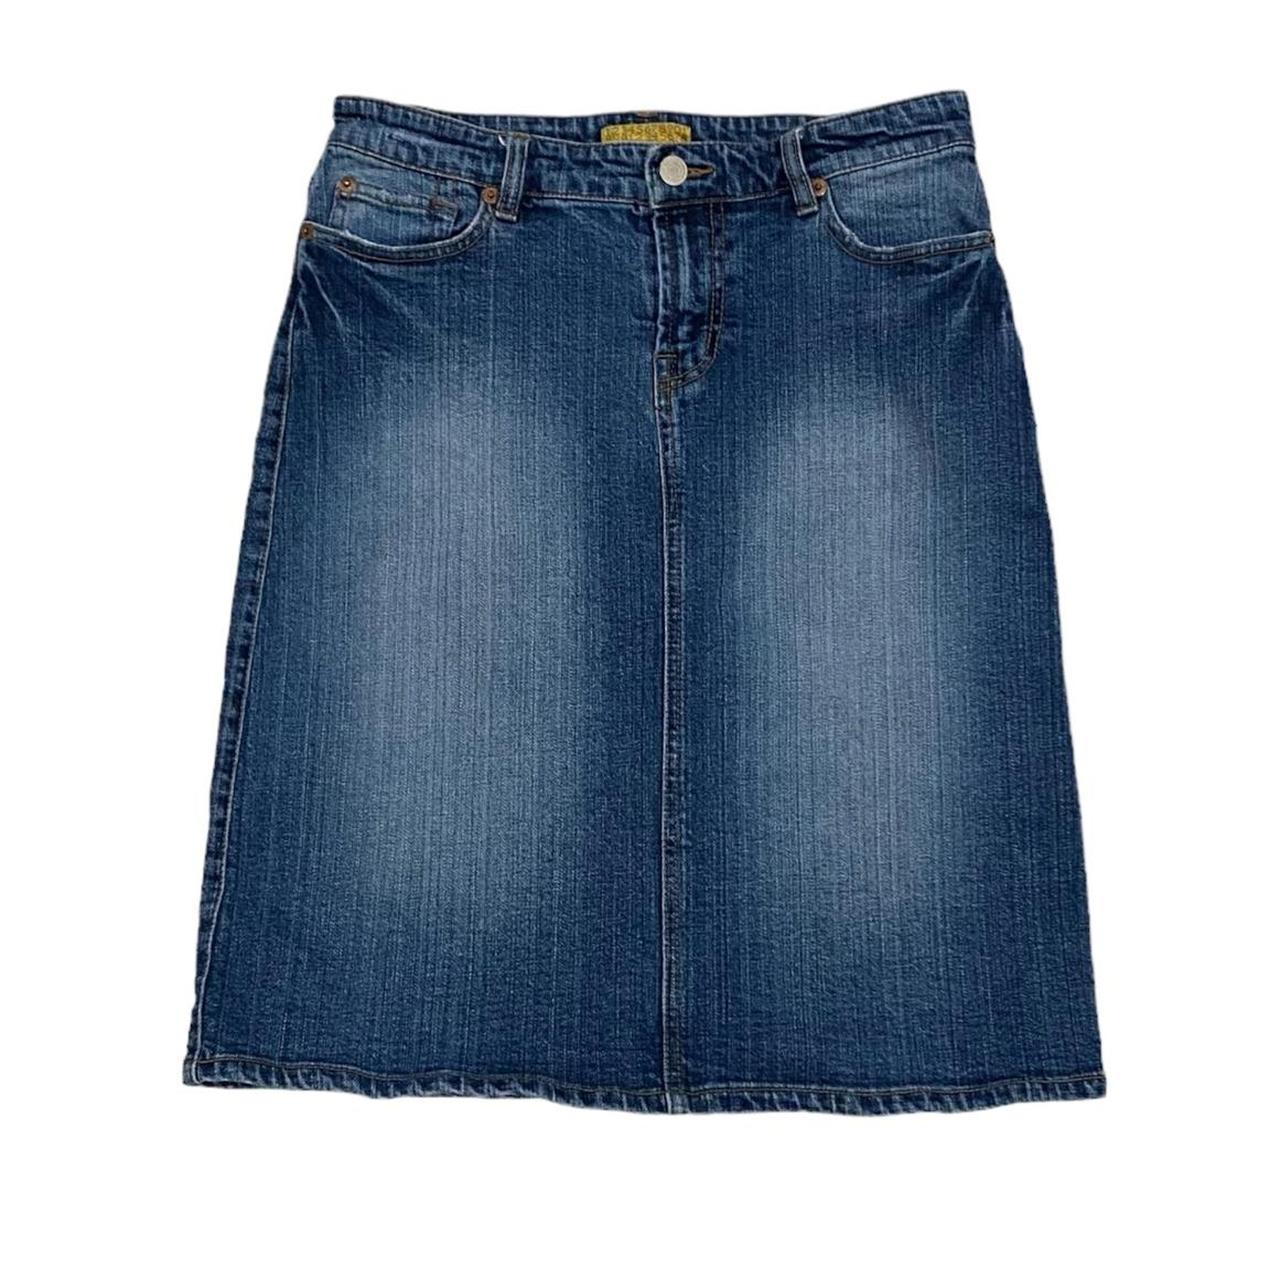 vintage denim midi skirt ⭐️ • such a unique yet... - Depop